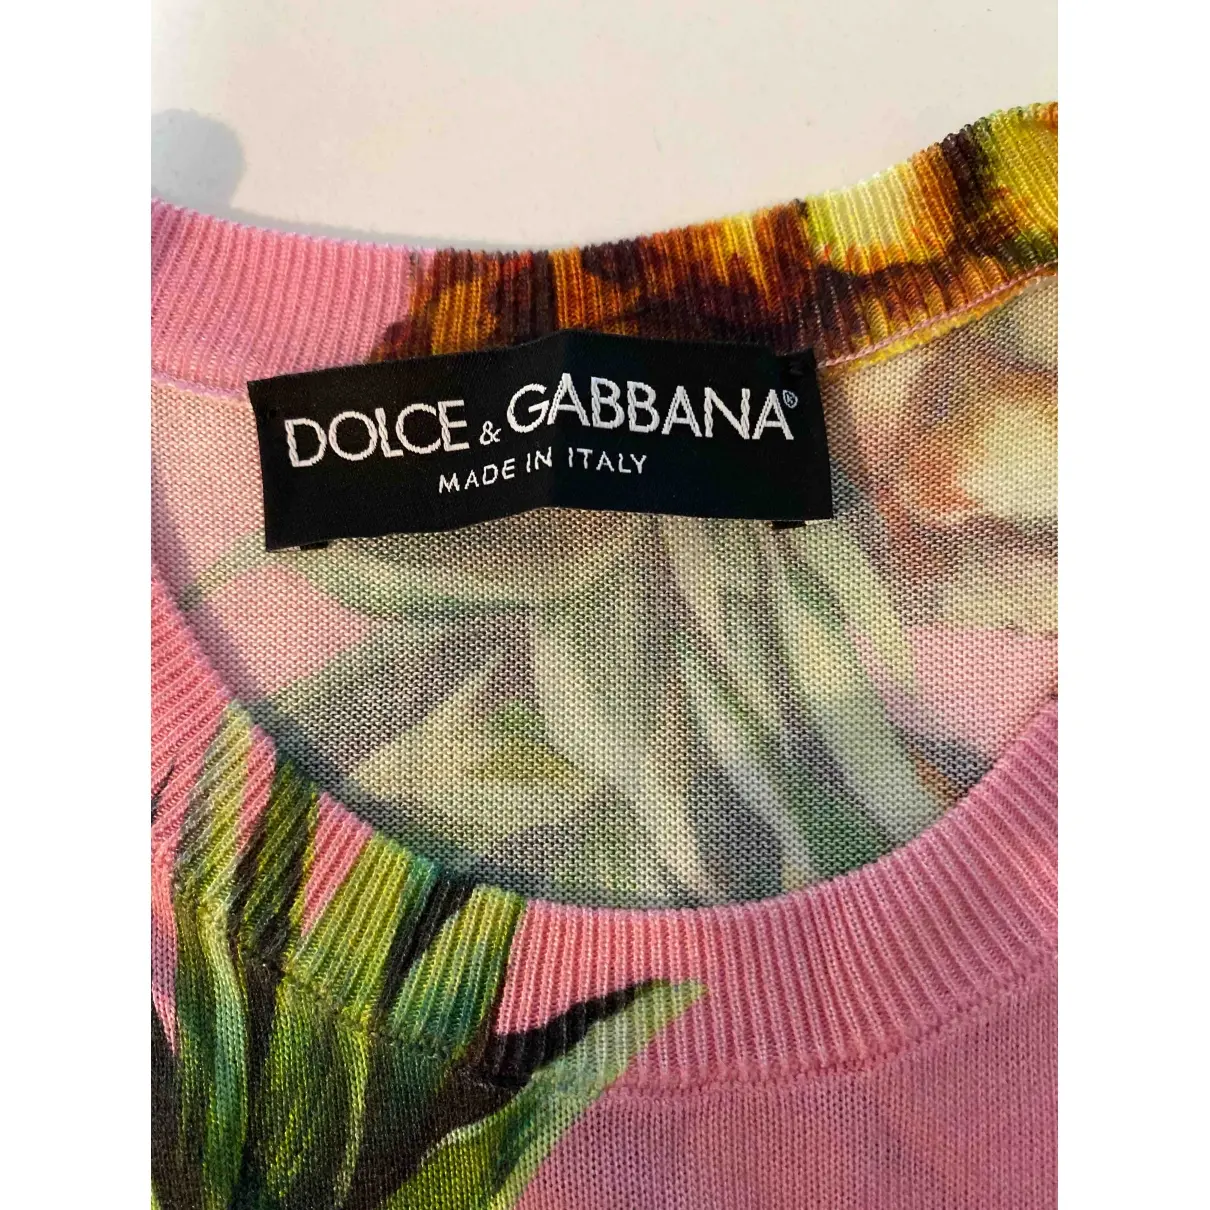 Dolce & Gabbana Camisole for sale